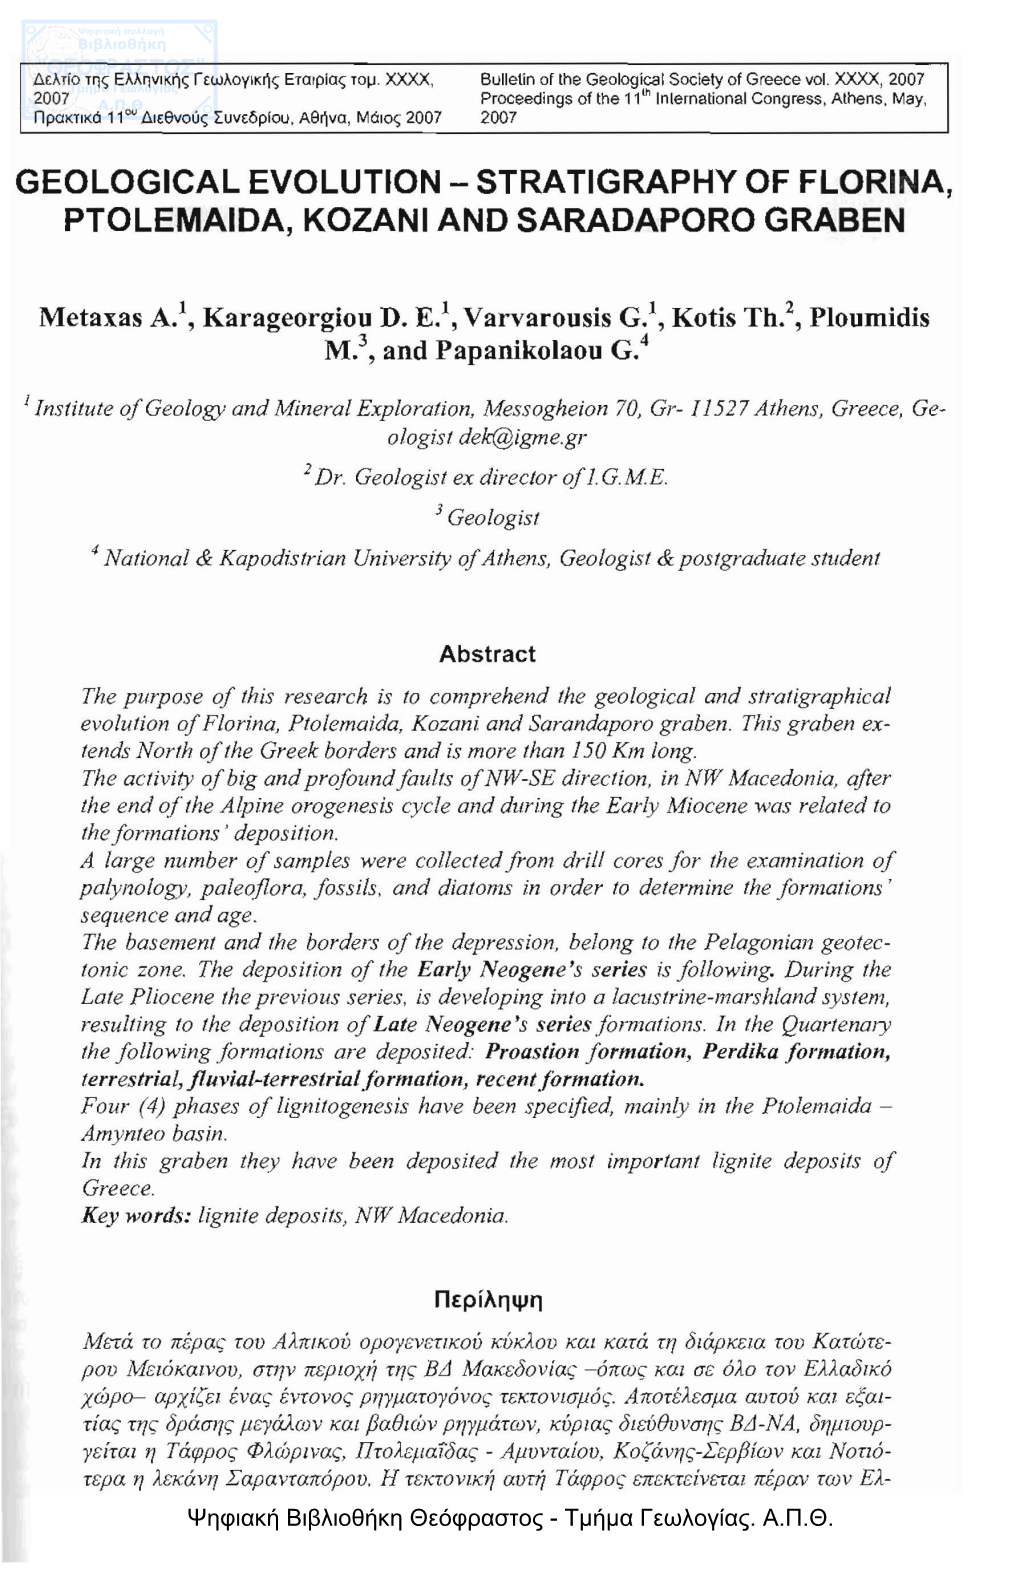 Geological Evolution - Stratigraphy of Florina, Ptolemaida, Kozani and Saradaporo Graben